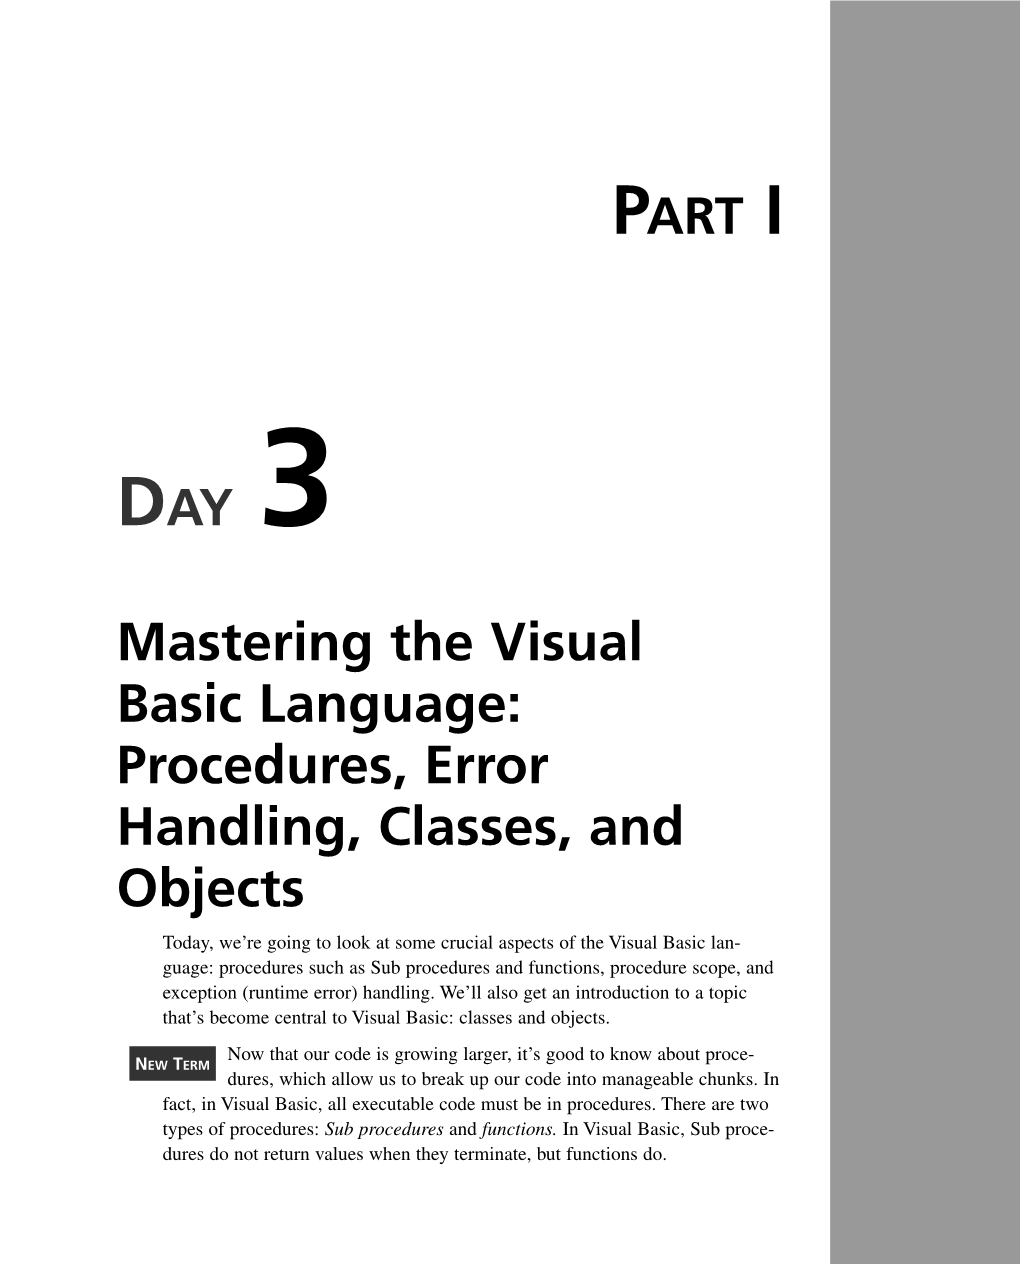 Procedures, Error Handling, Classes, and Objects